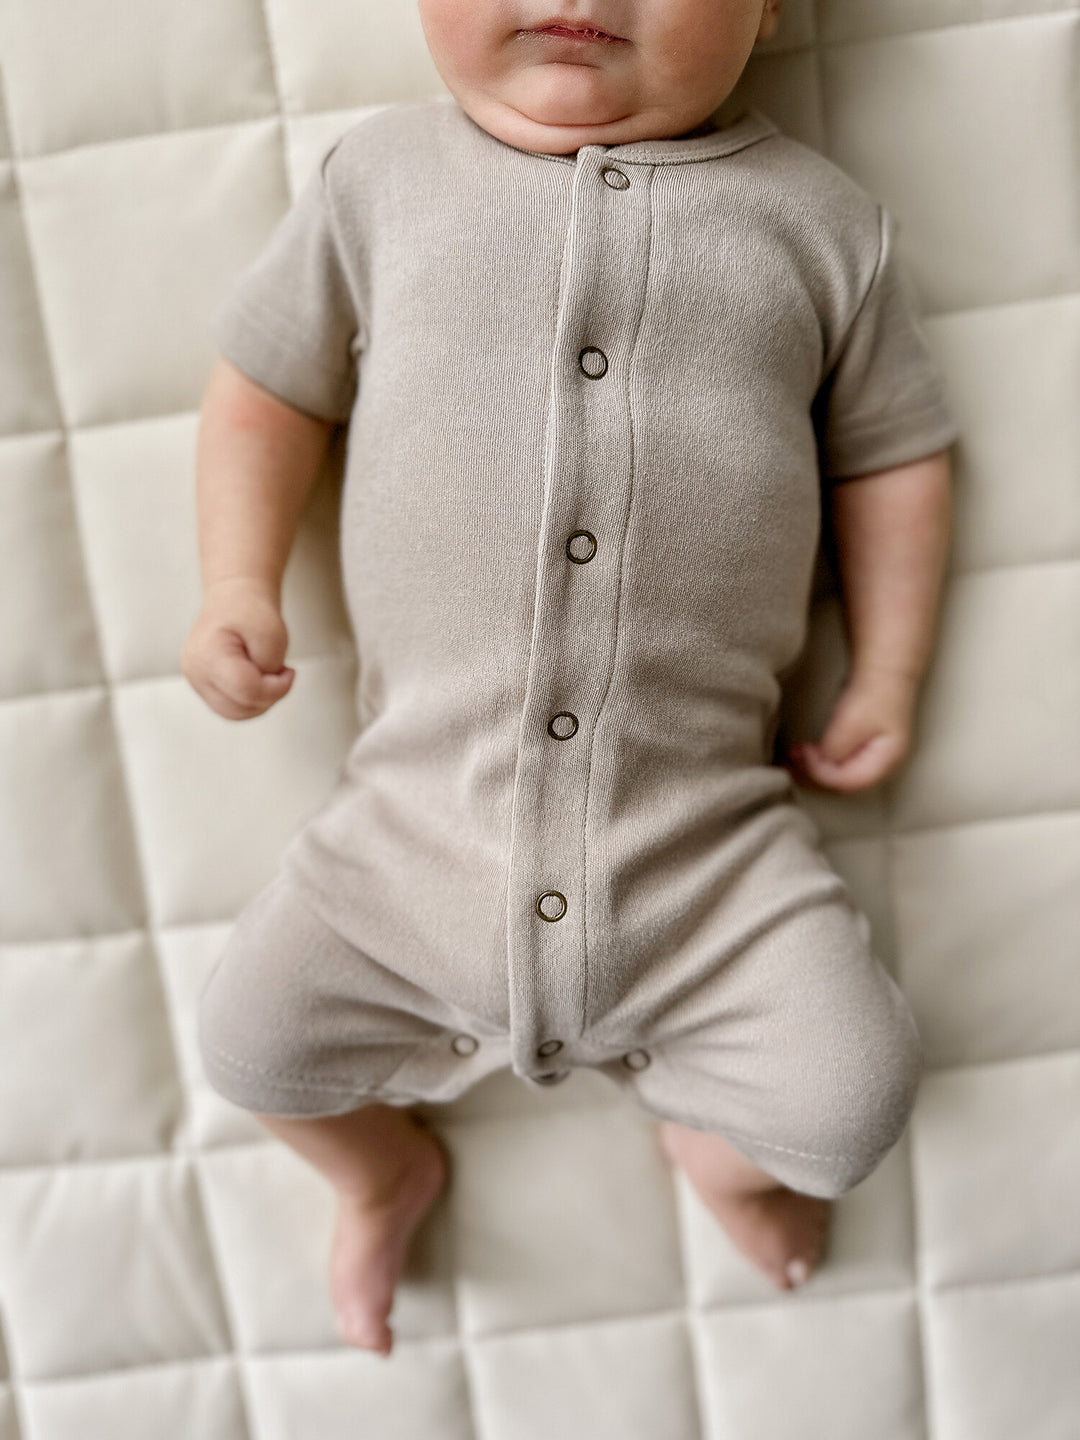 Child wearing Organic Short-Sleeve Romper in Neutrals.